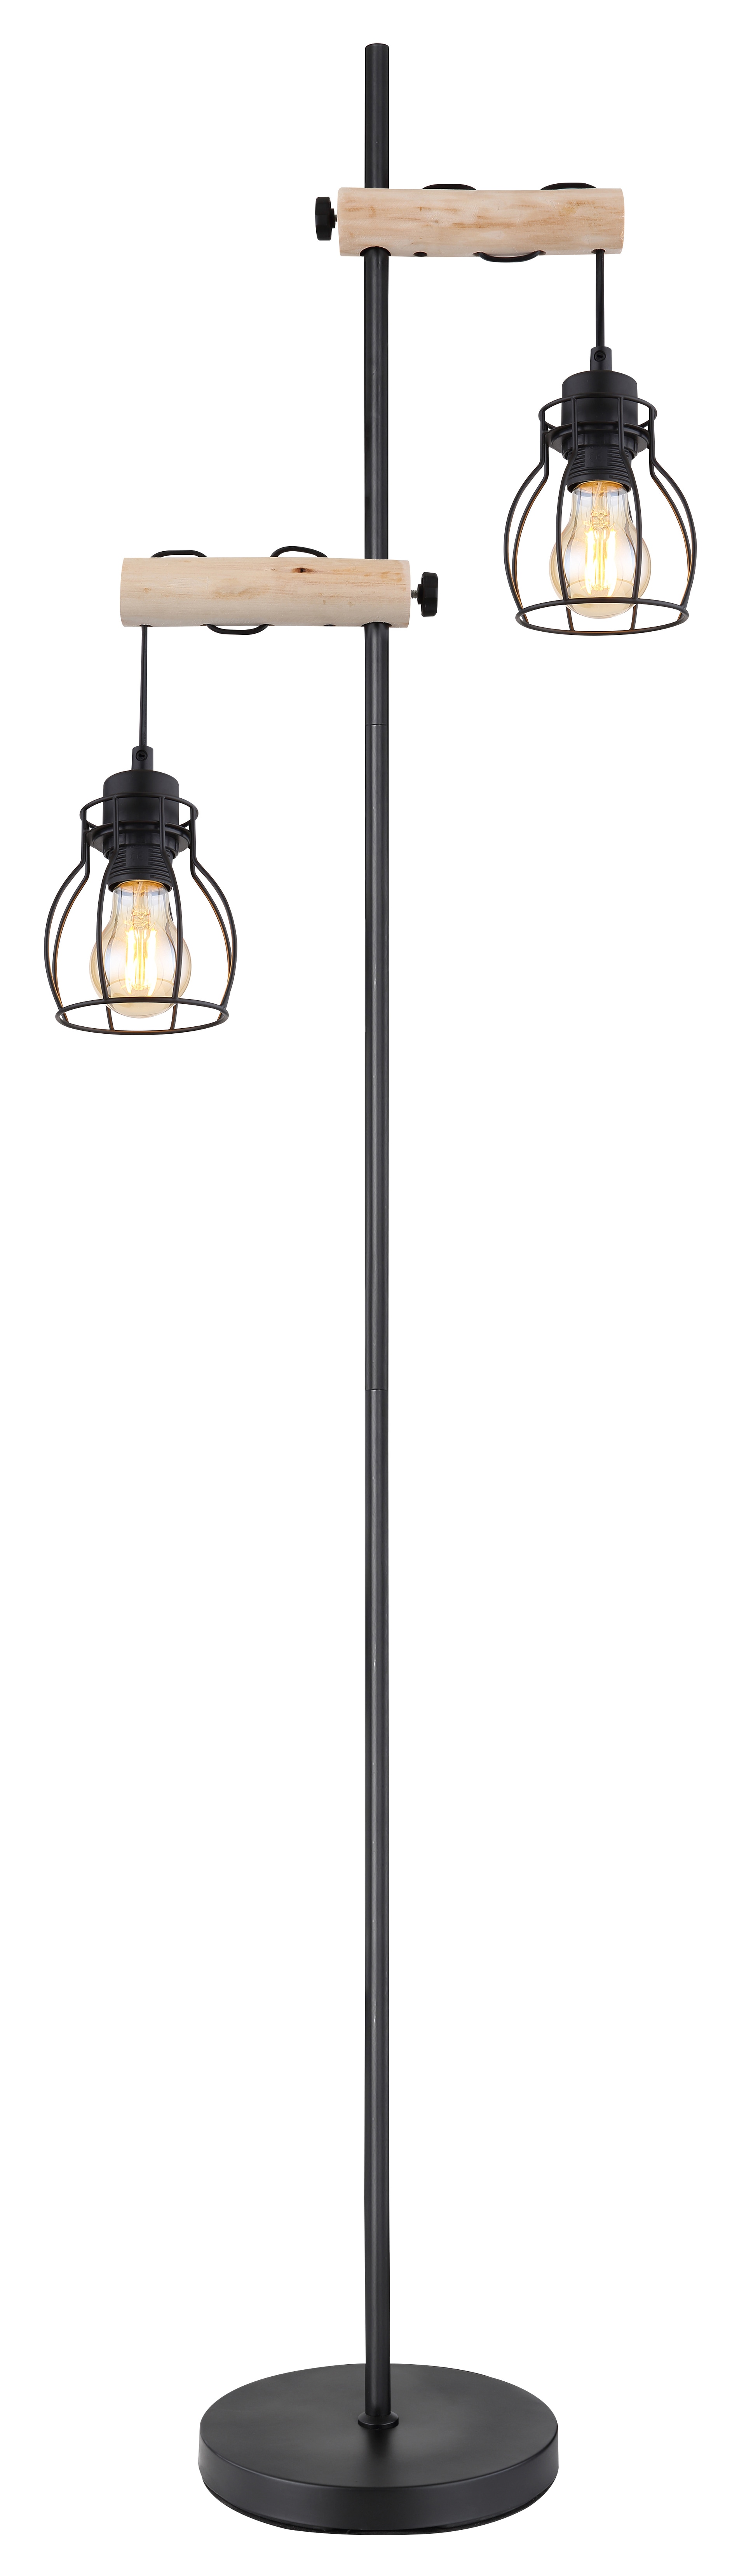 GLOBO Retrofit Stehlampe MINA II schwarz /Holz naturfarbig